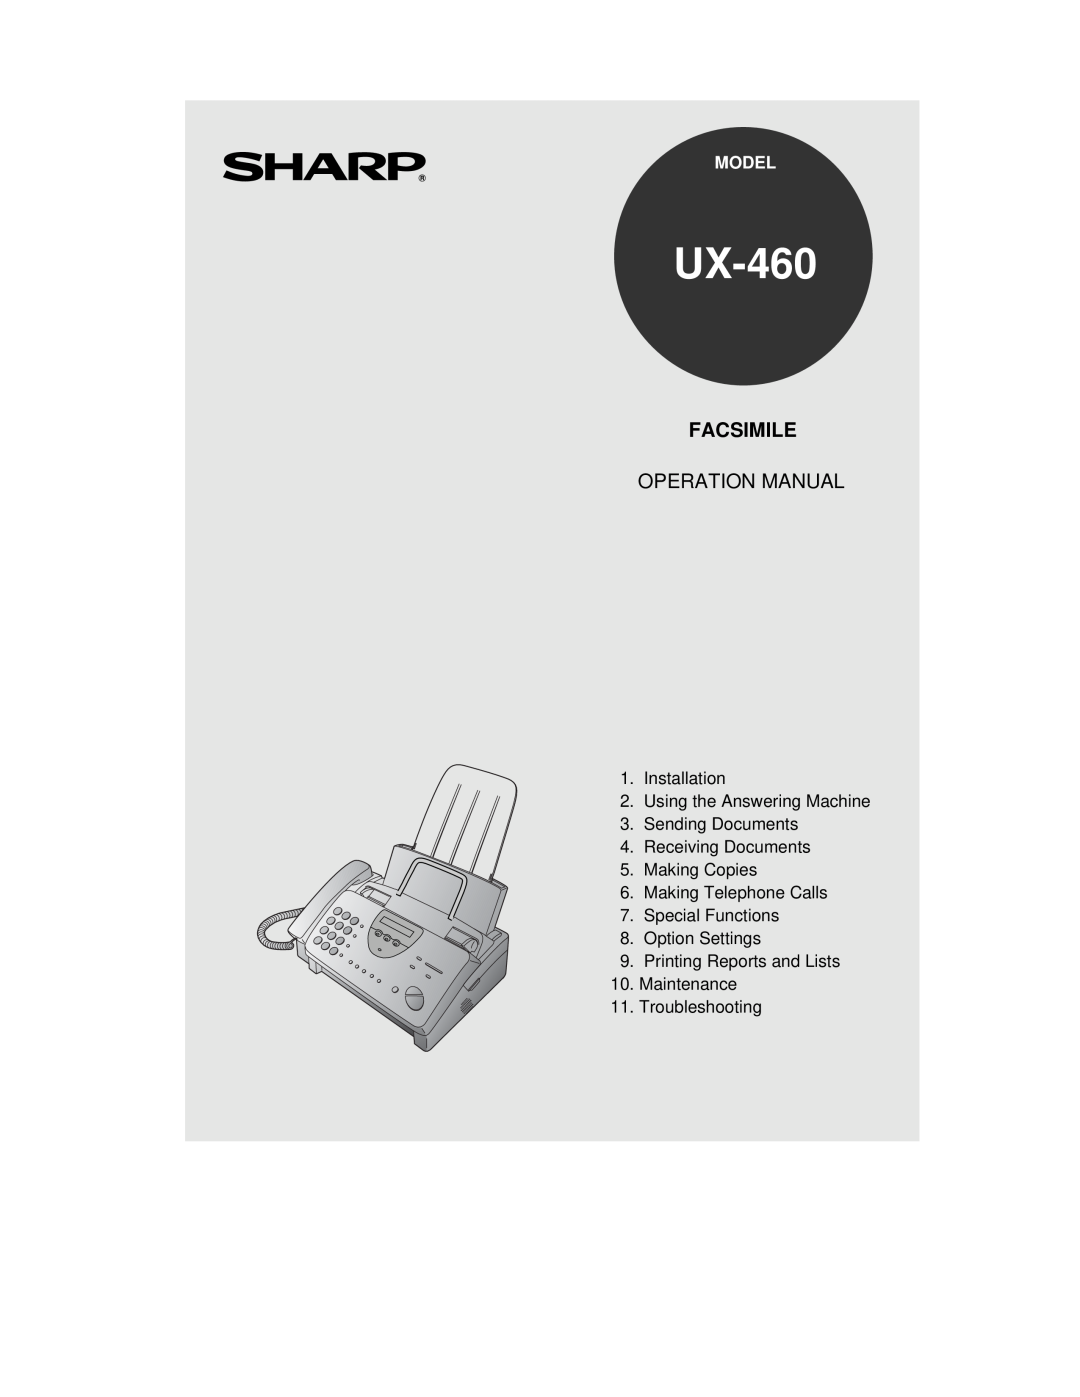 Sharp UX-460 operation manual Facsimile, Operation Manual, Model, Maintenance 11. Troubleshooting 